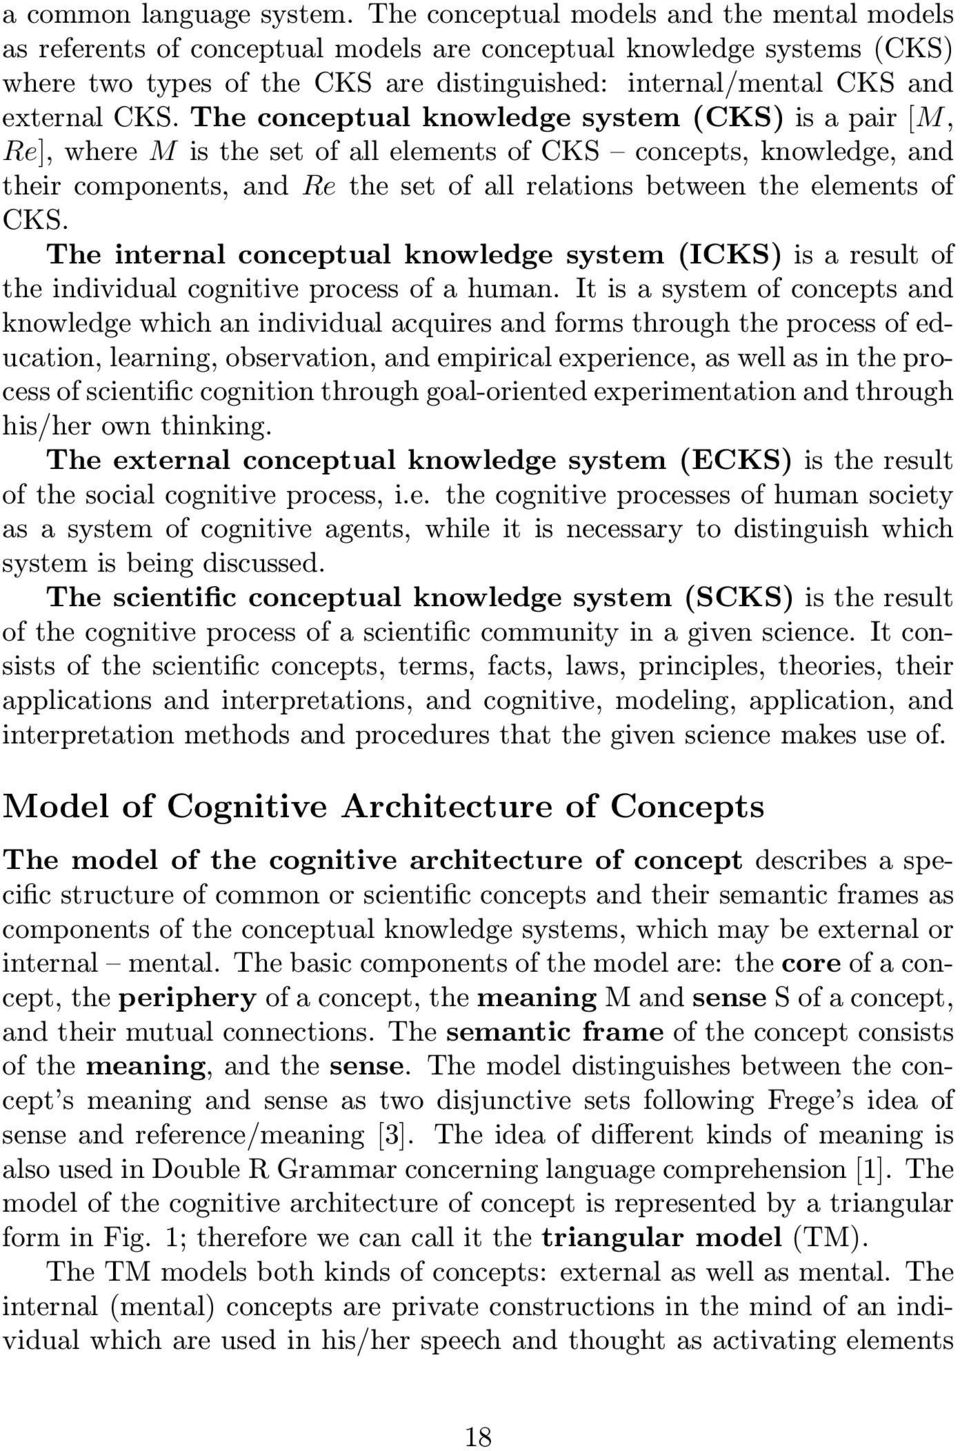 Theinternalconceptualknowledgesystem(ICKS)isaresultof theindividualcognitiveprocessofahuman.